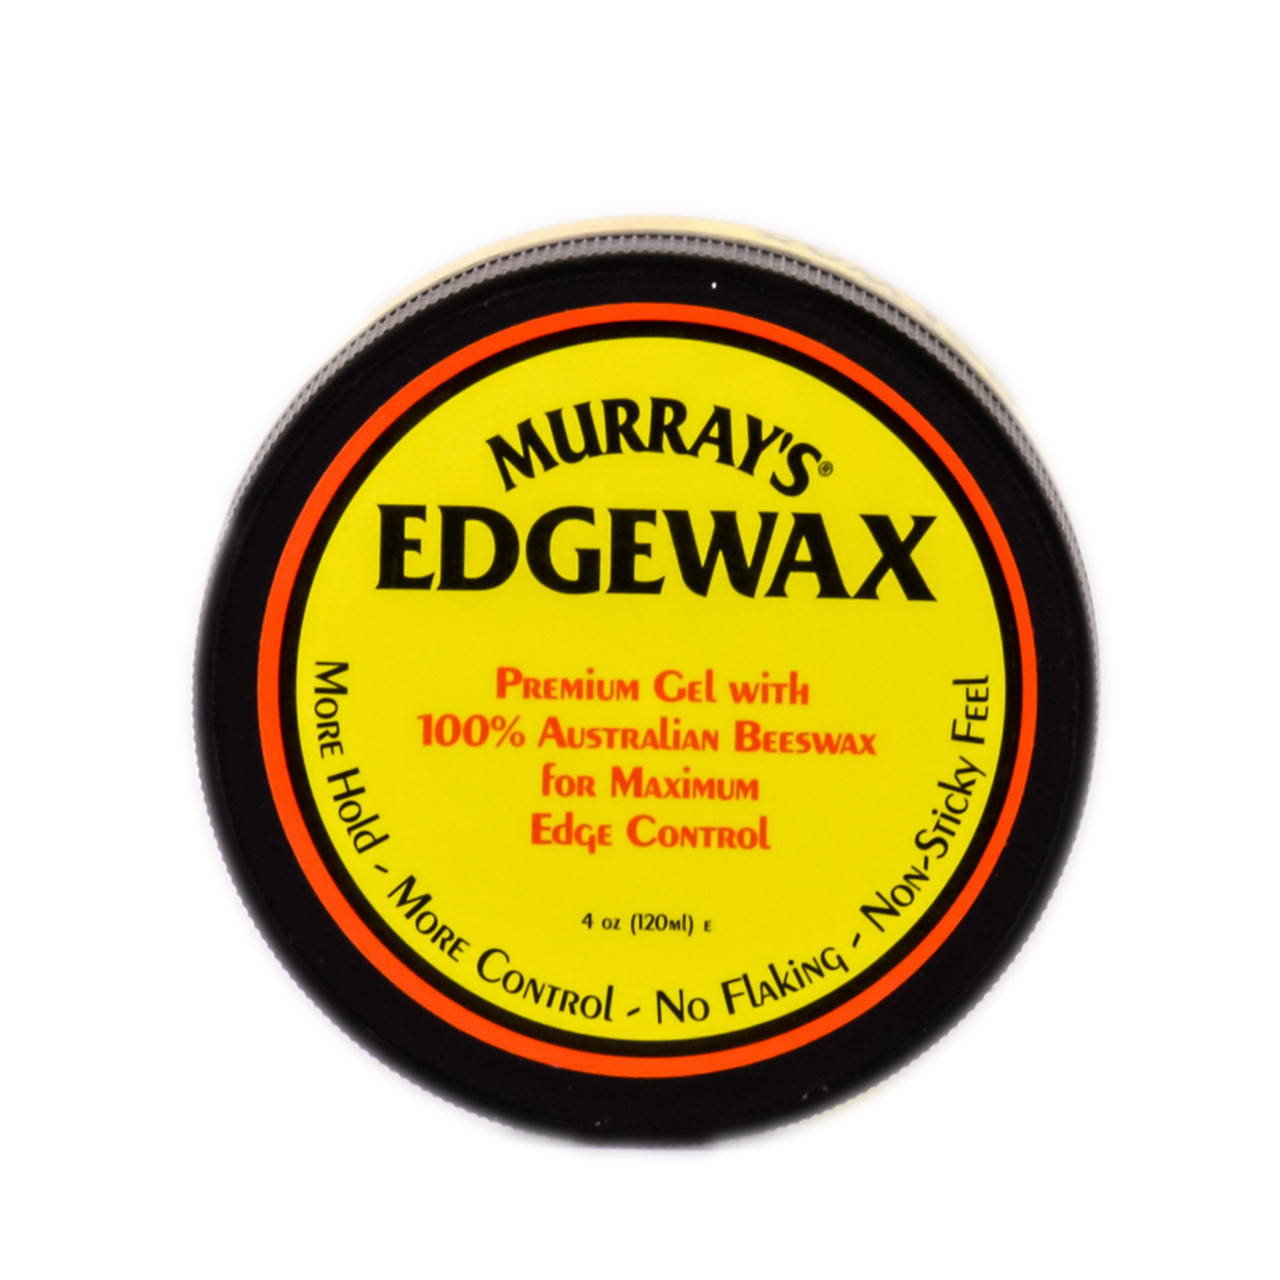 Murray's Edgewax Premium Gel SleekShop.com